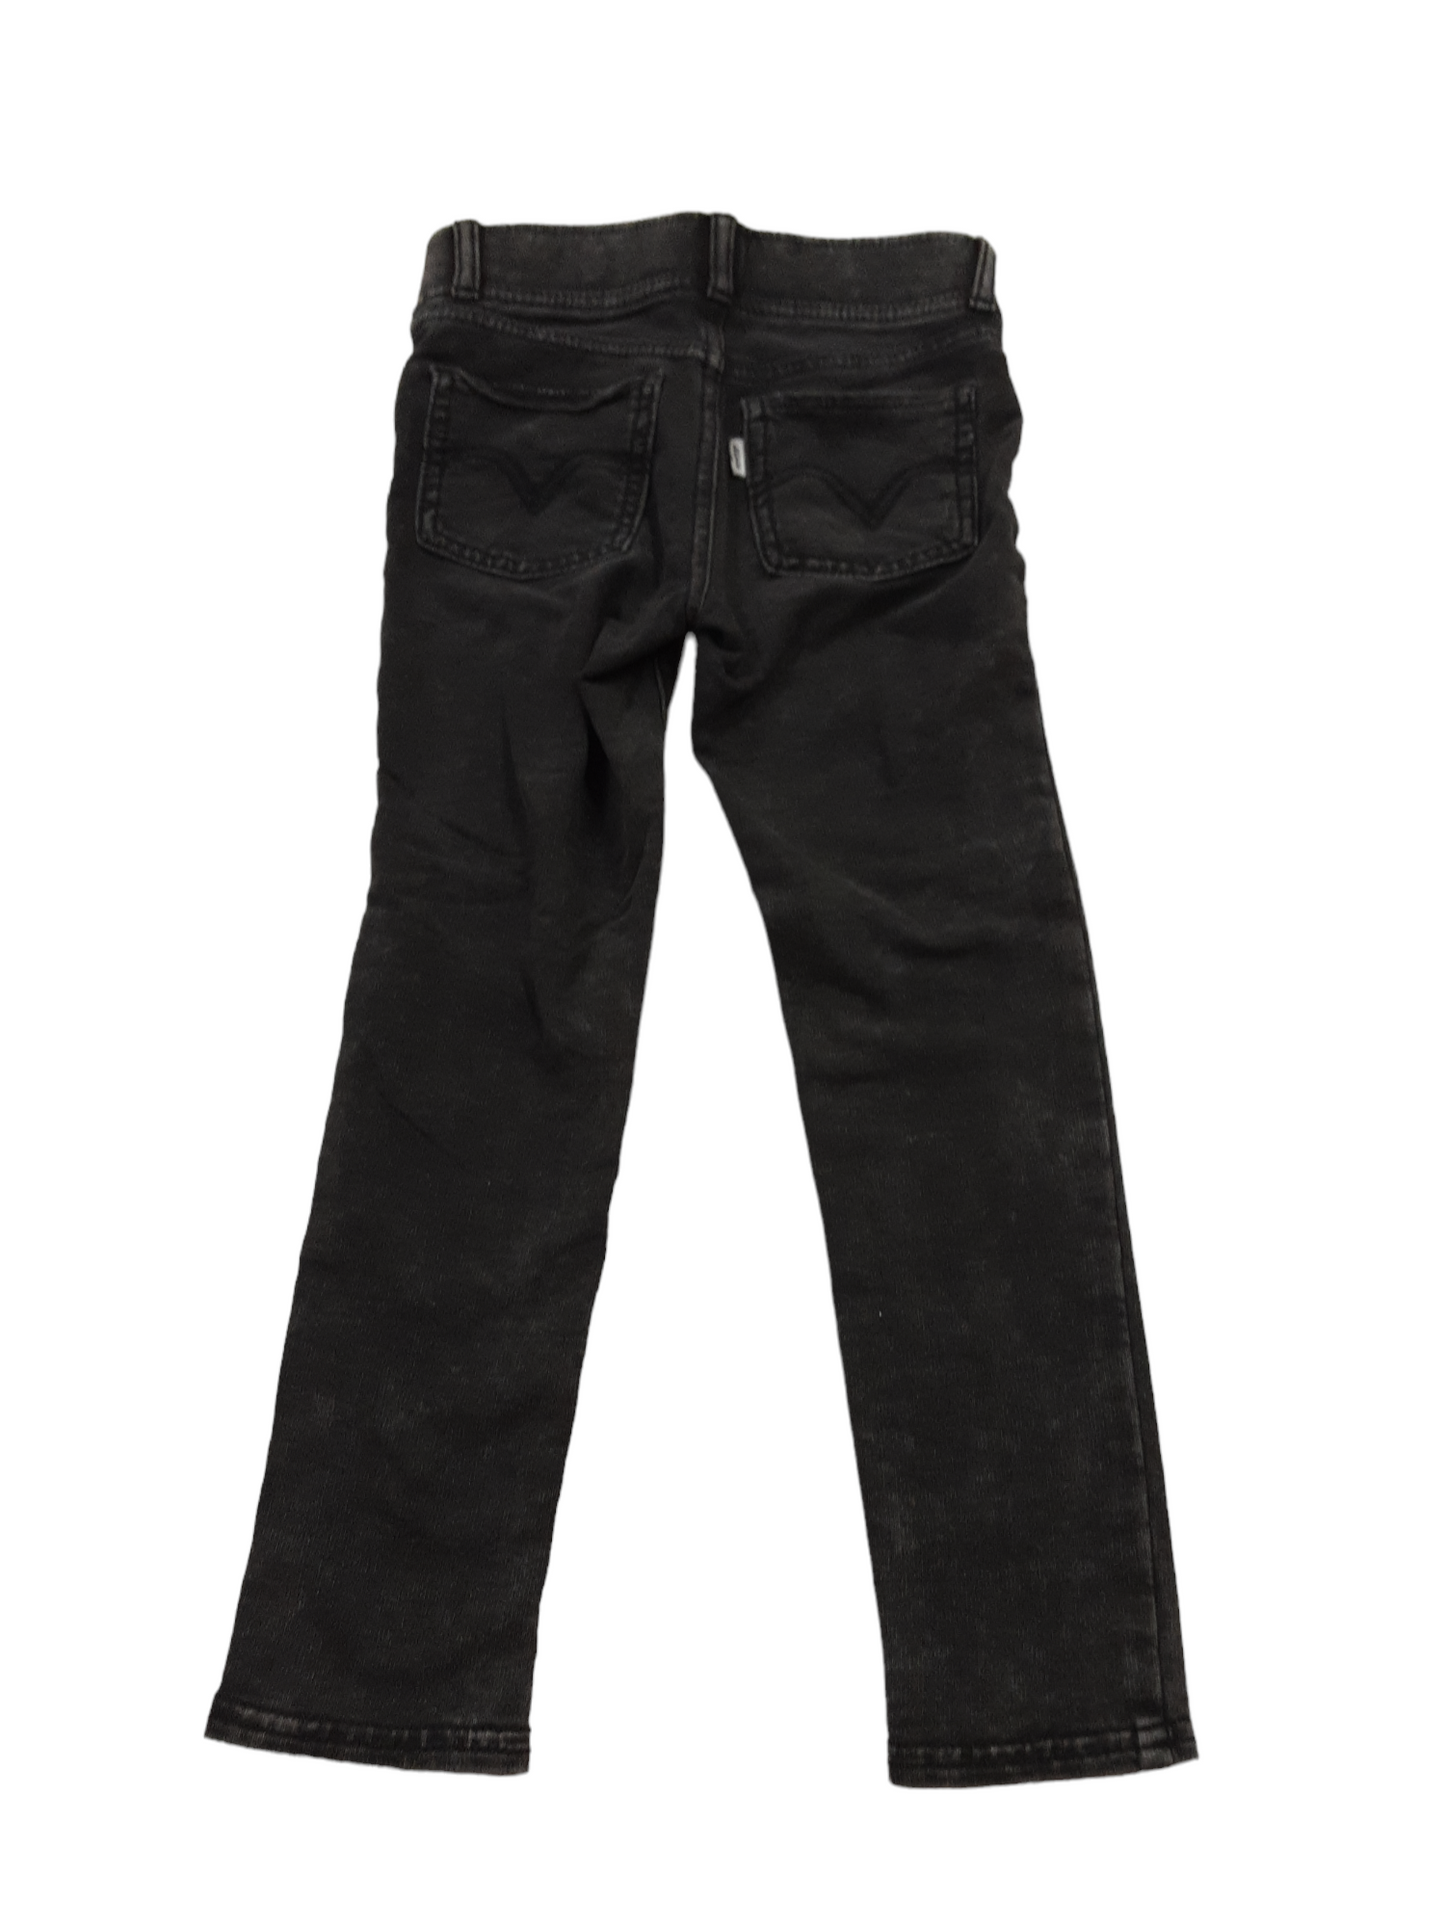 Charcoal black legging size 6-7